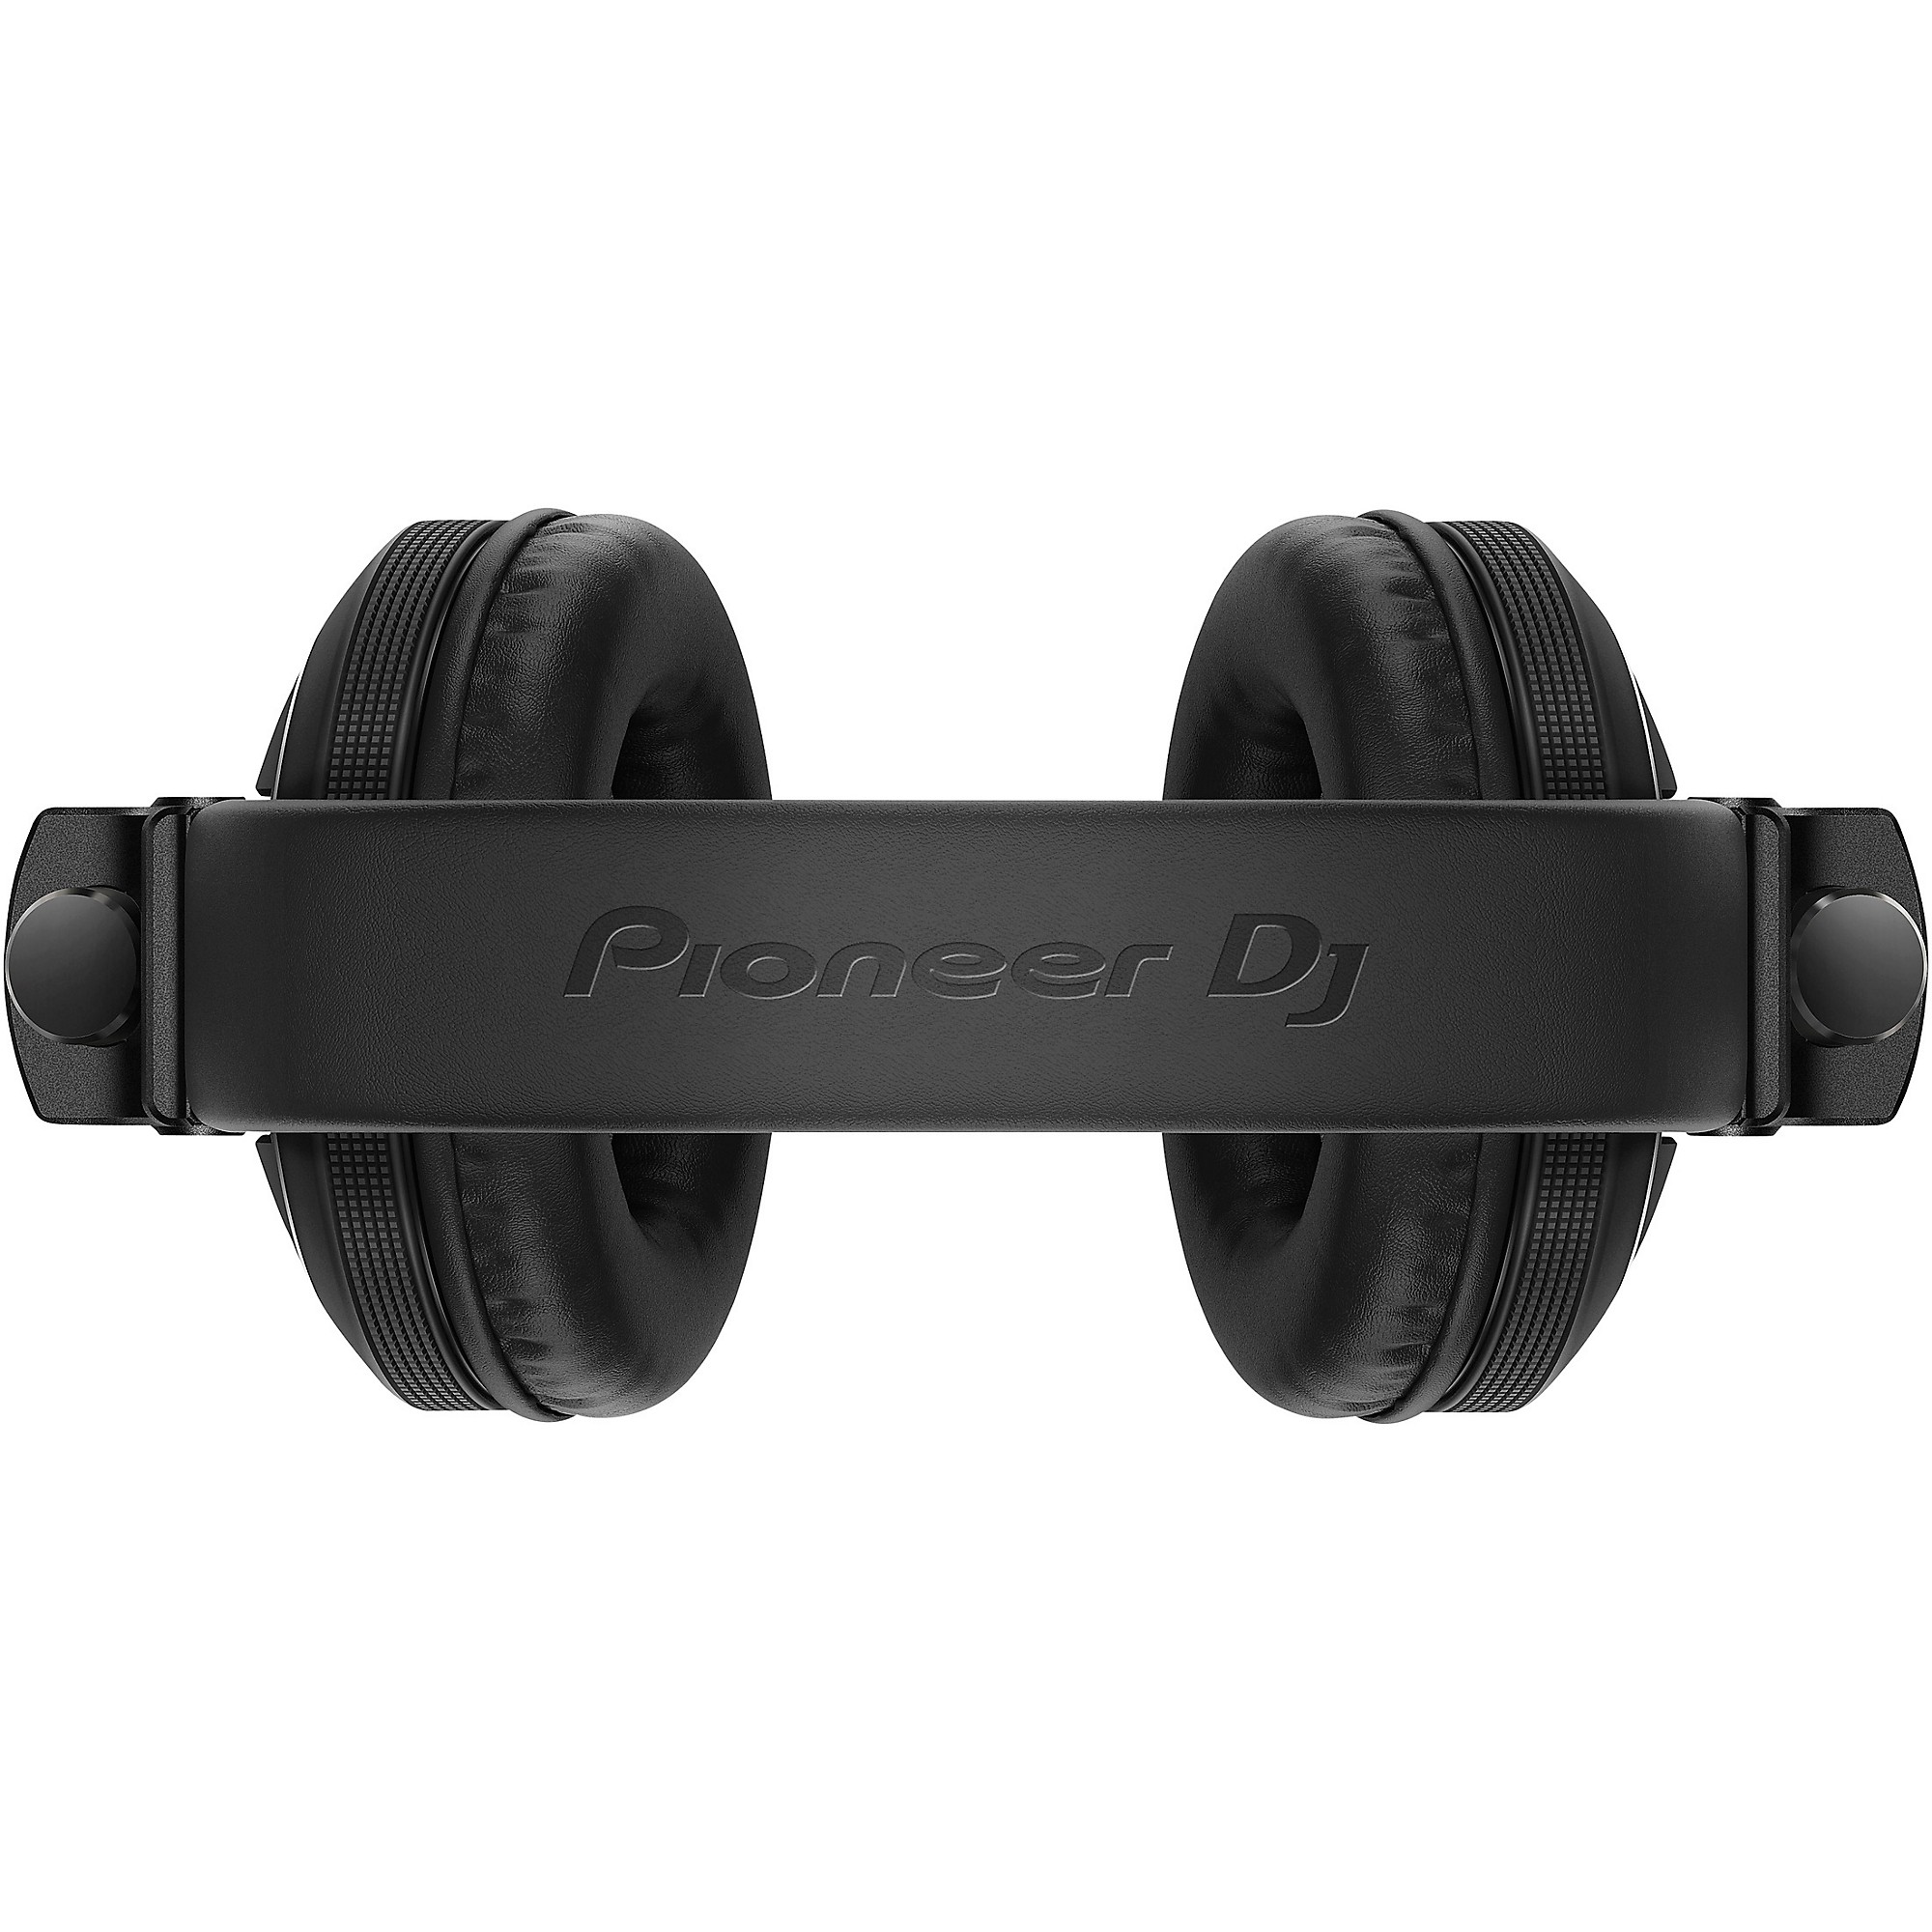 HDJ-X5 Over-ear DJ headphones (black) - Pioneer DJ